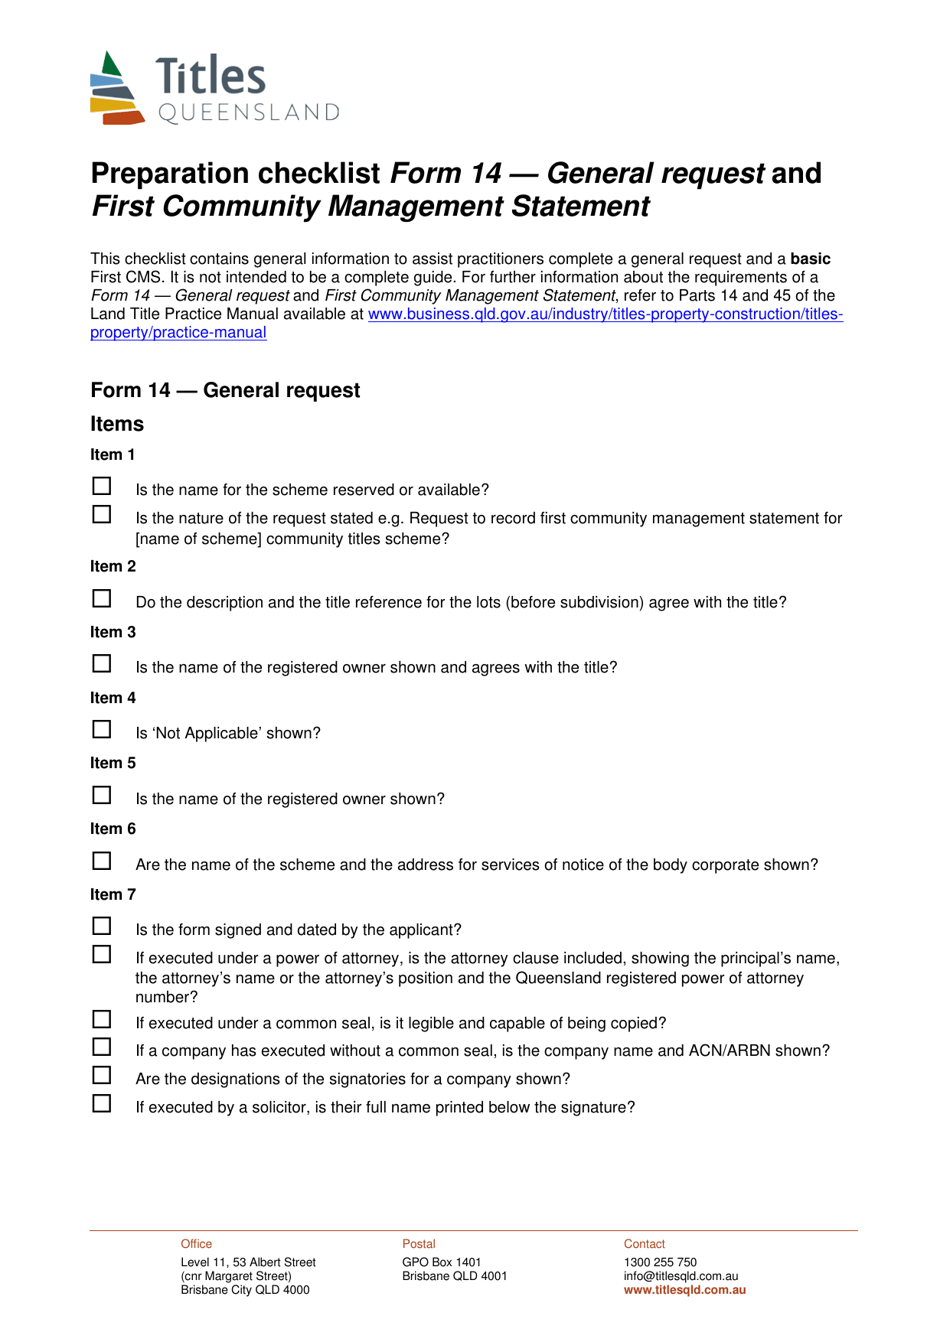 Form 14 Preparation Checklist - General Request and First Community Management Statement - Queensland, Australia, Page 1